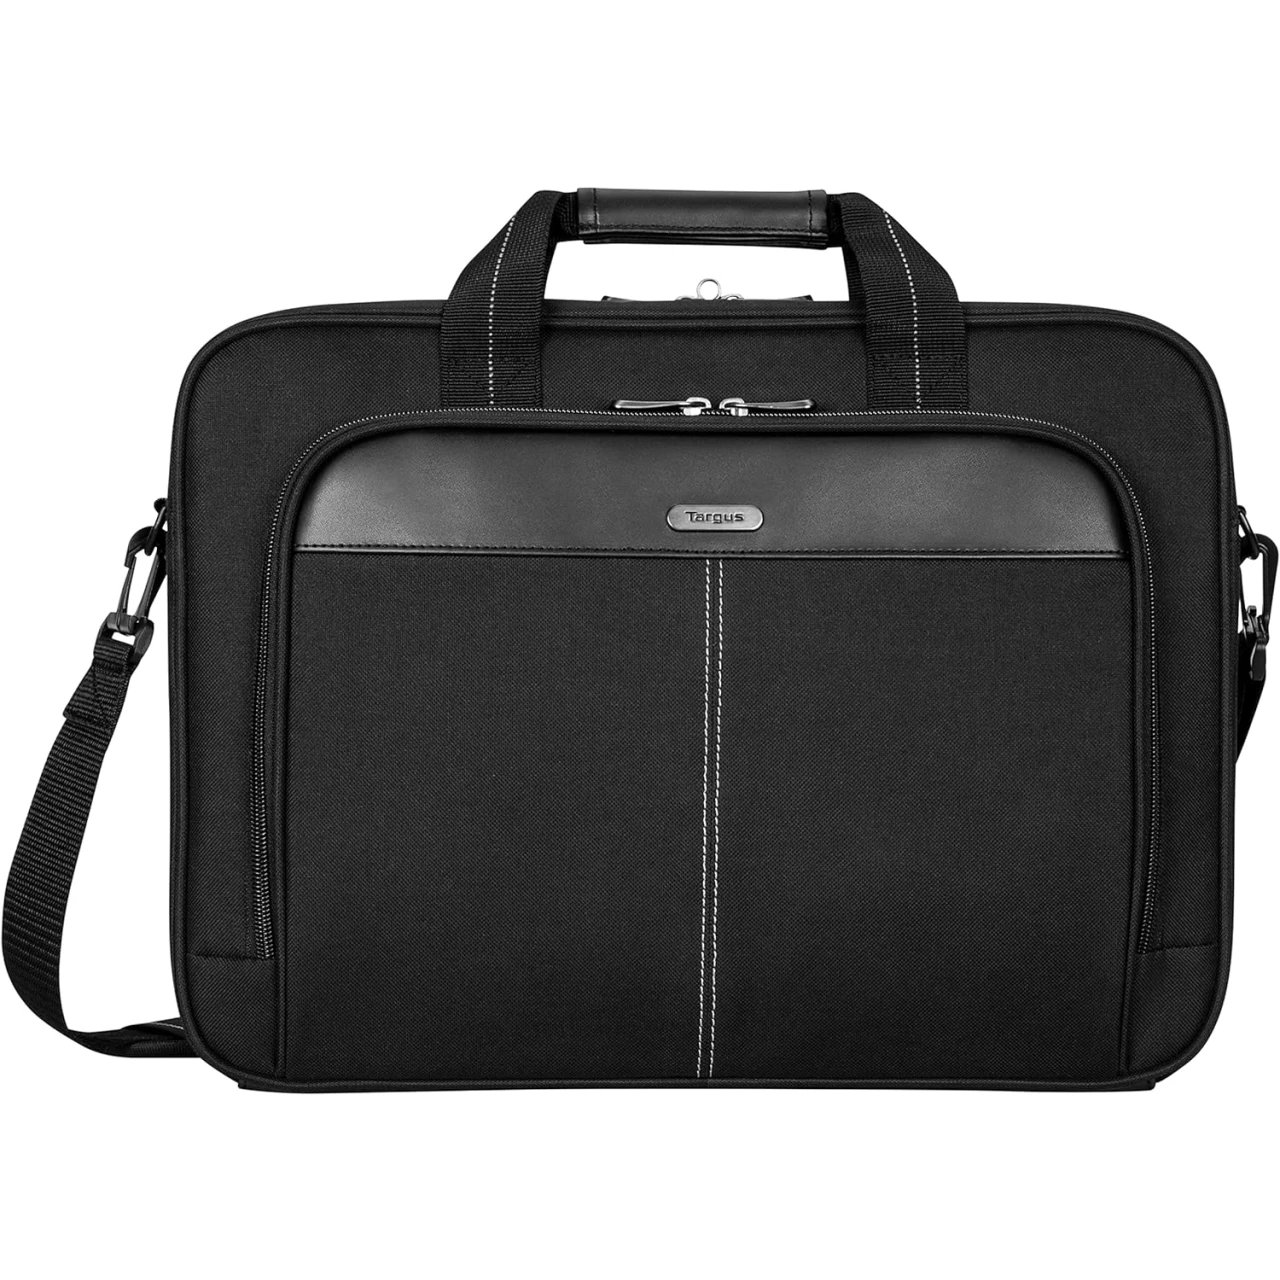 Targus Laptop Bag Classic Slim Briefcase Messenger Bag, Spacious, Ergonomic, Foam Padded Laptop Case